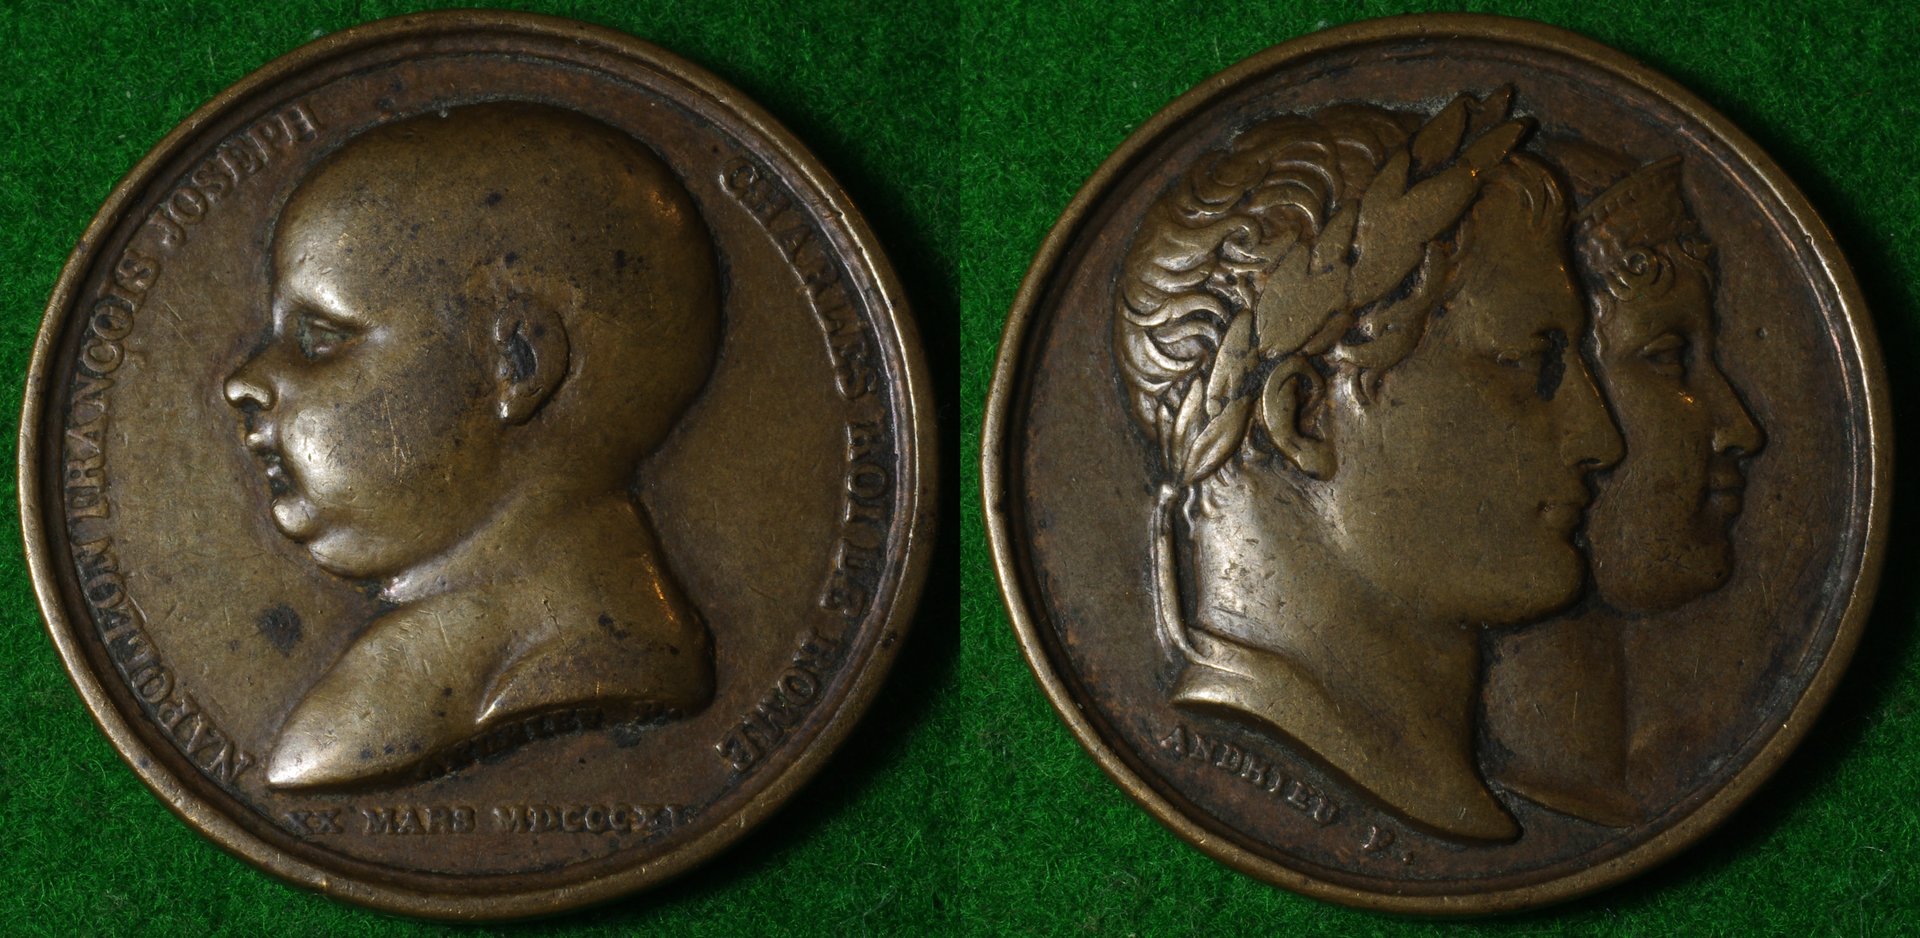 Napoleon 1811 Medal 1-horz.jpg